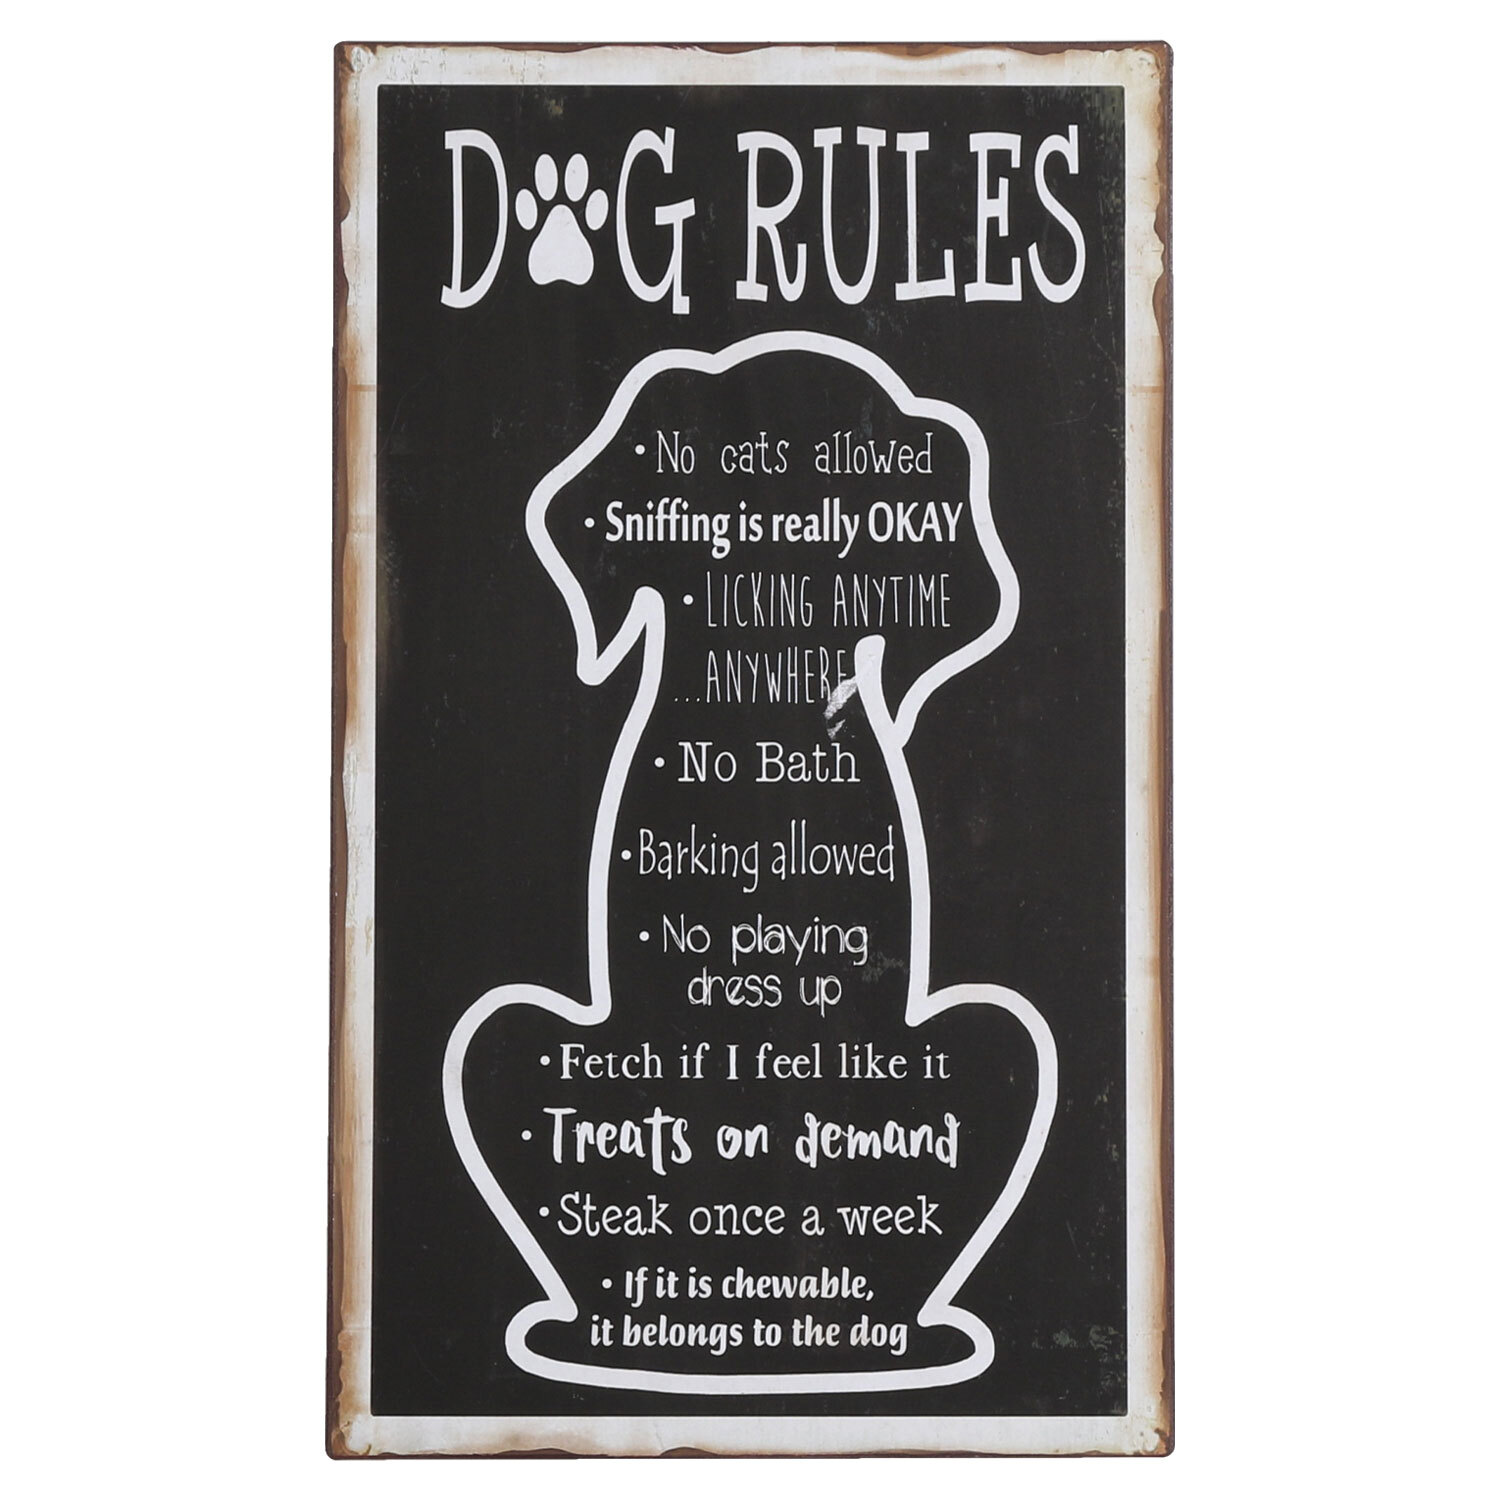 Pet Rules Metal Plaque Image 2